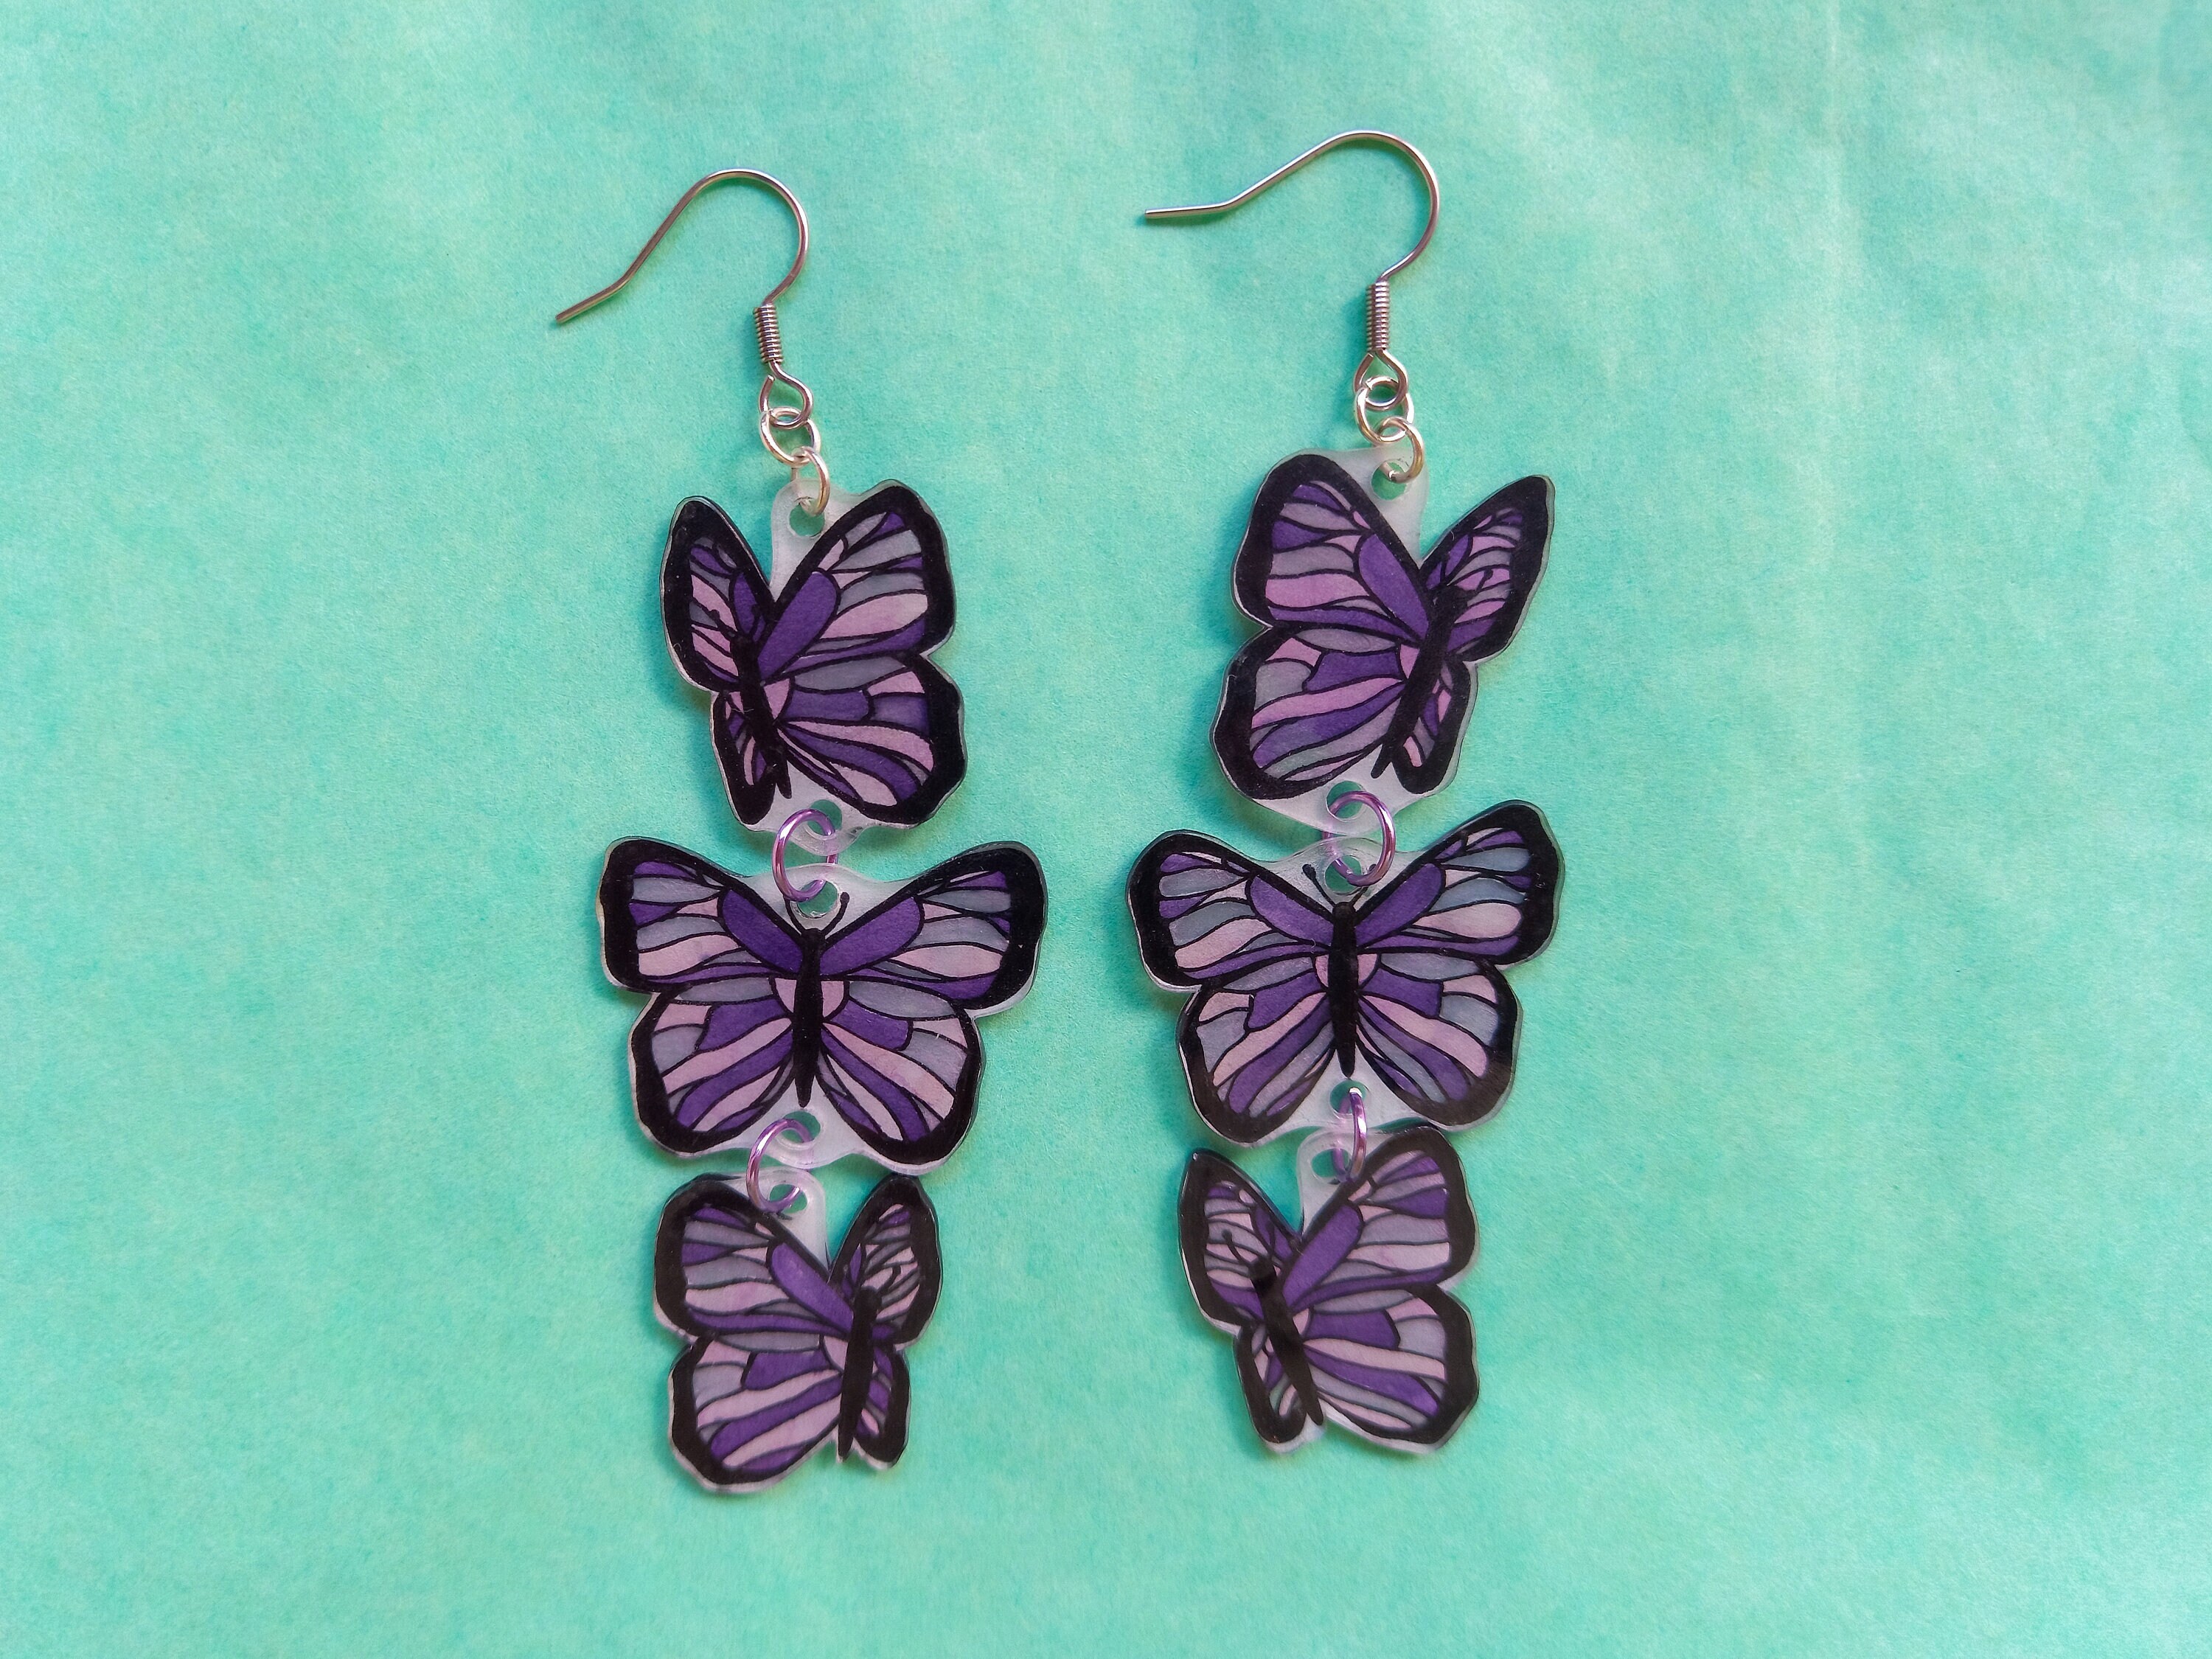 Faux Butterfly Wing Earrings with Resin